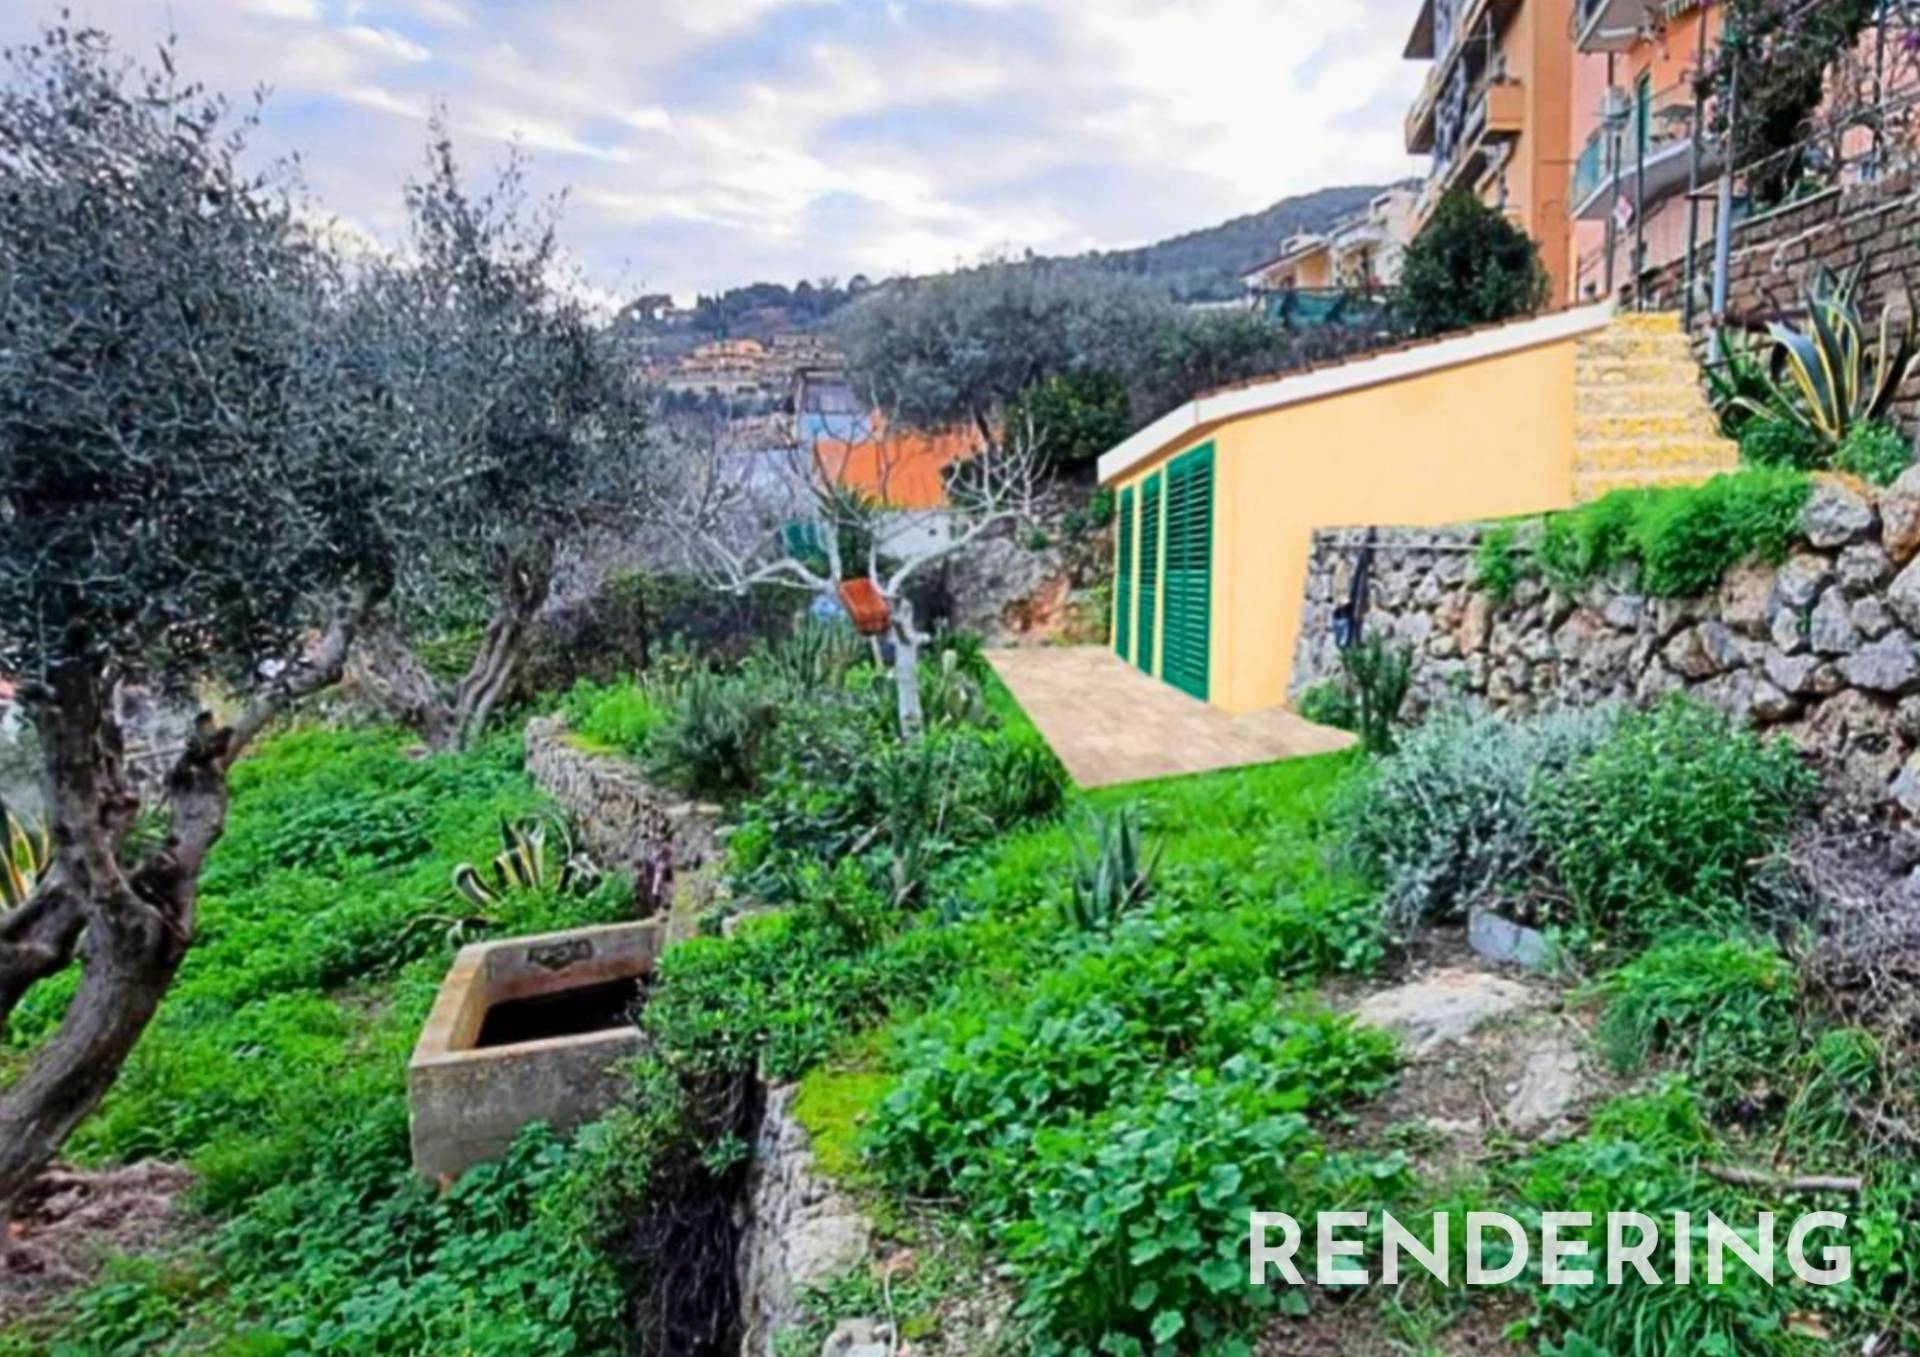 Rustico con giardino, Monte Argentario porto santo stefano